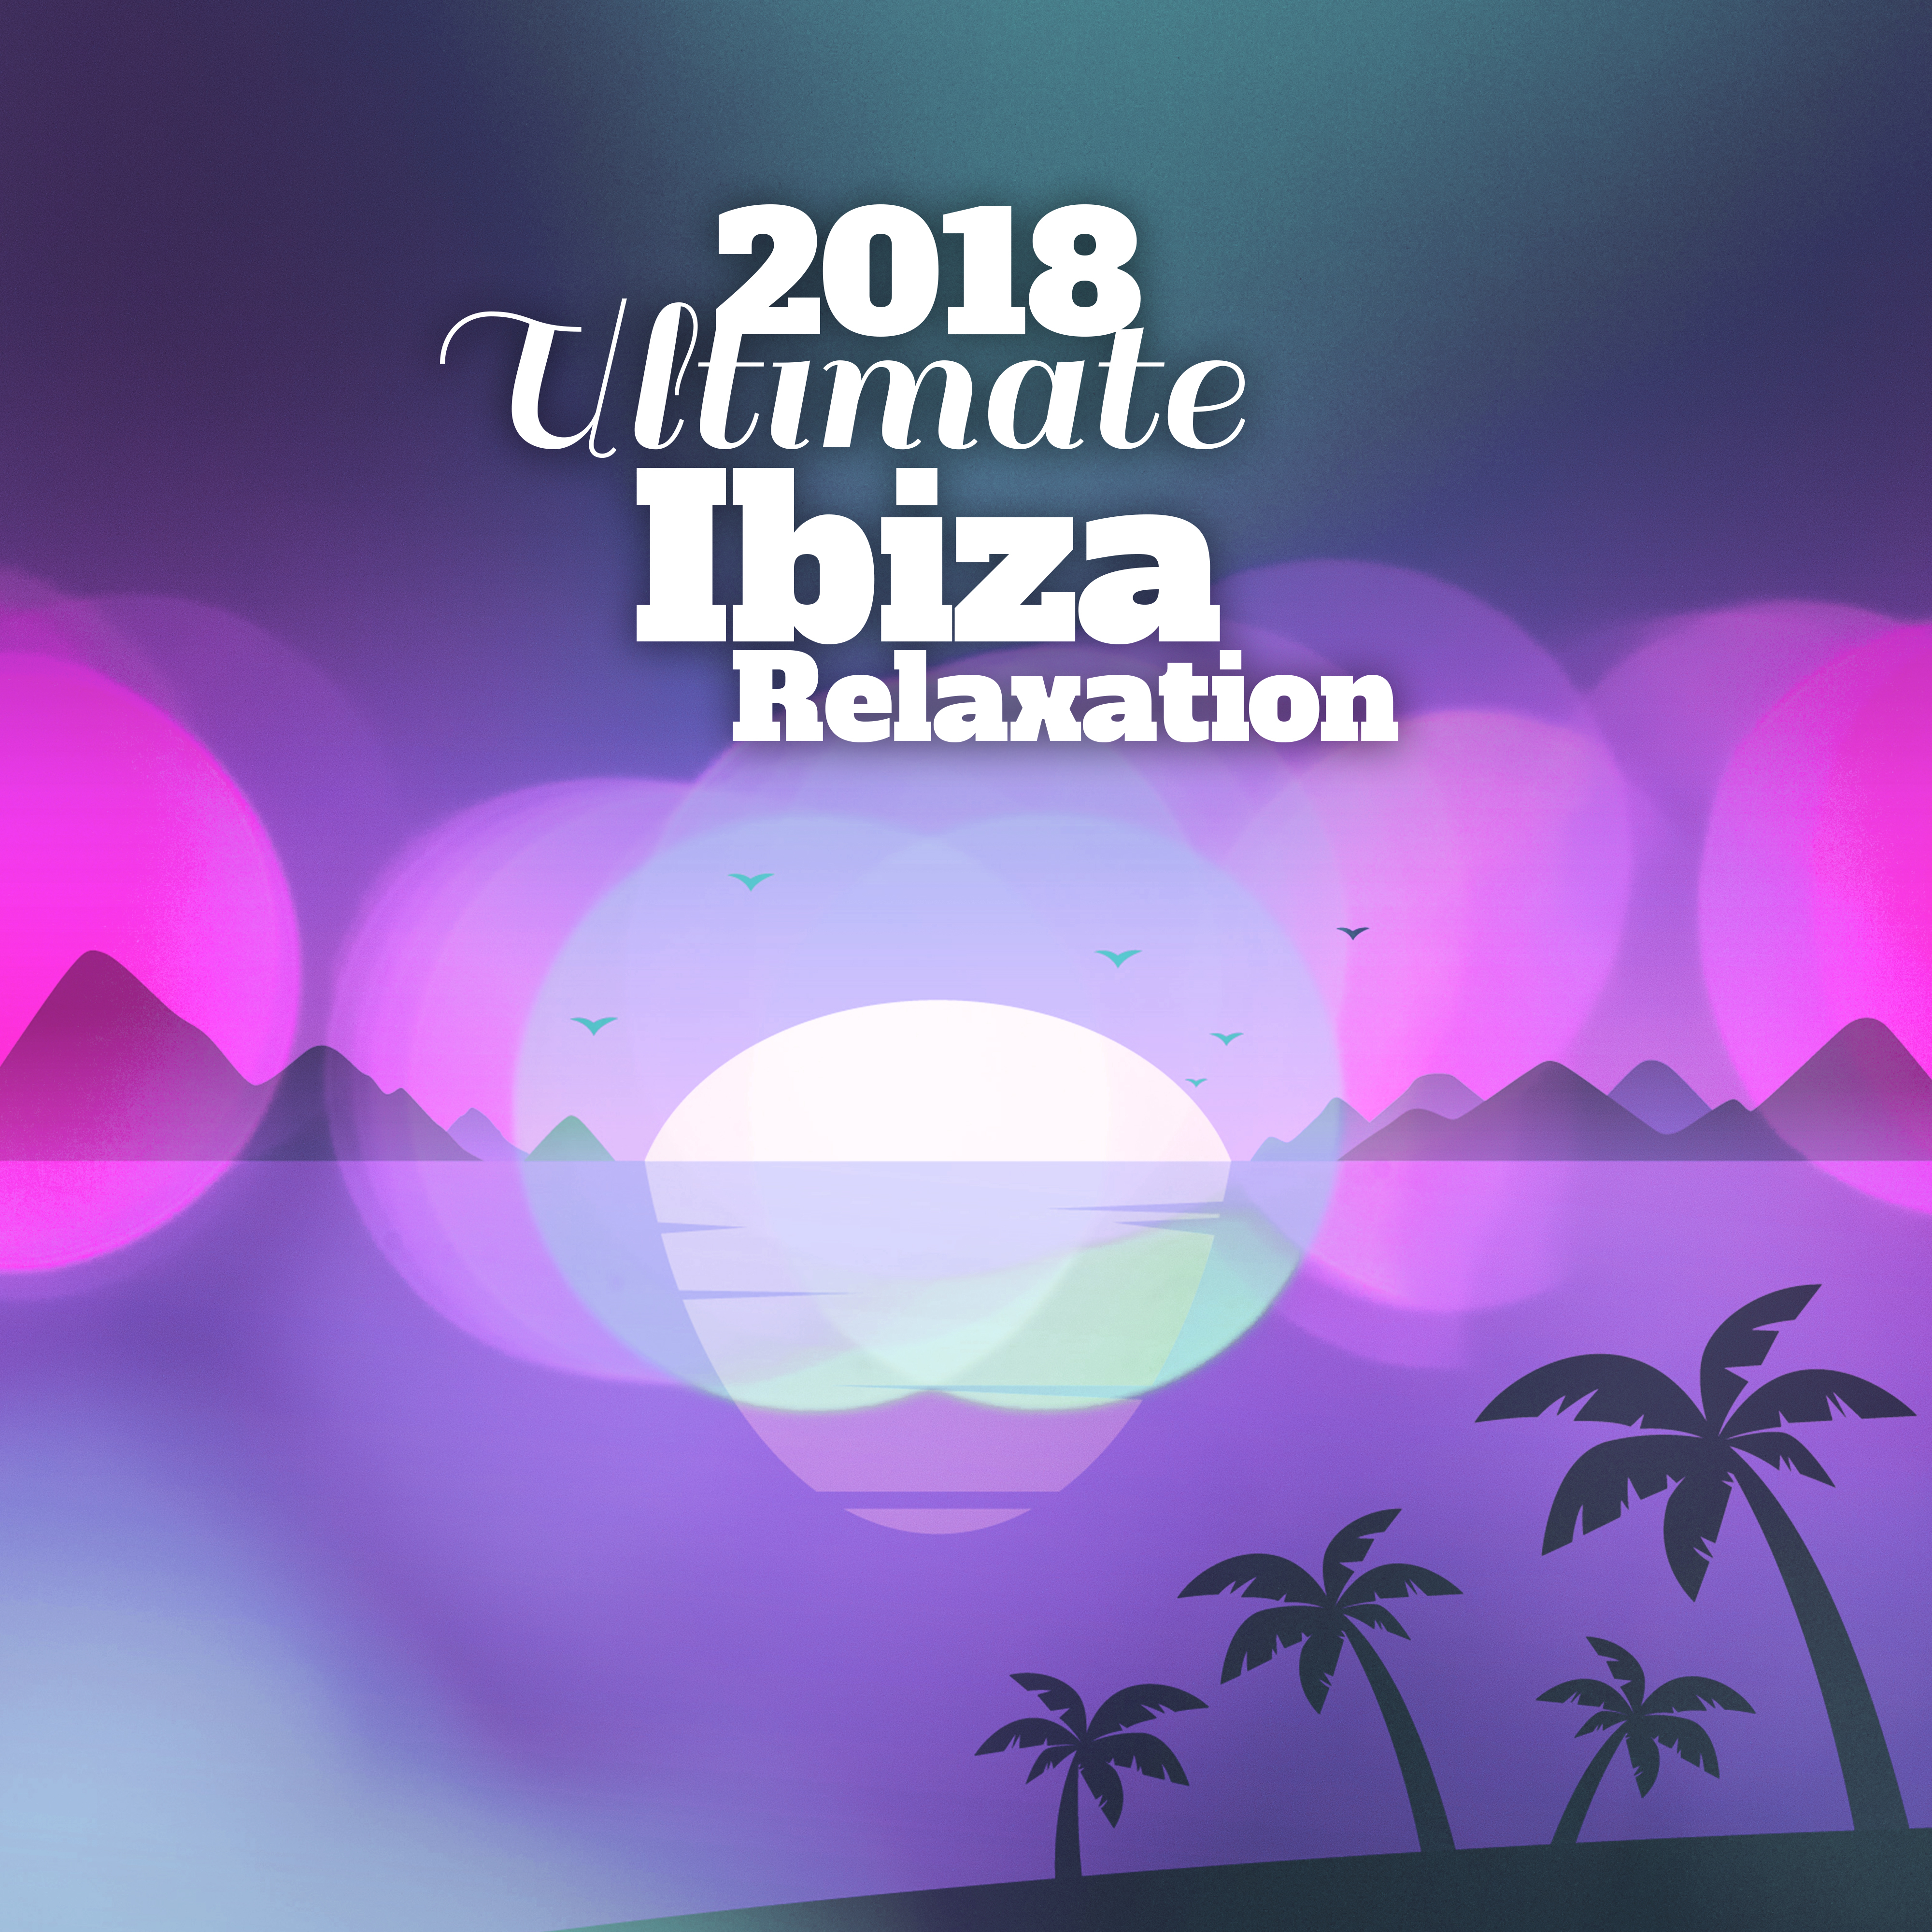 2018 Ultimate Ibiza Relaxation